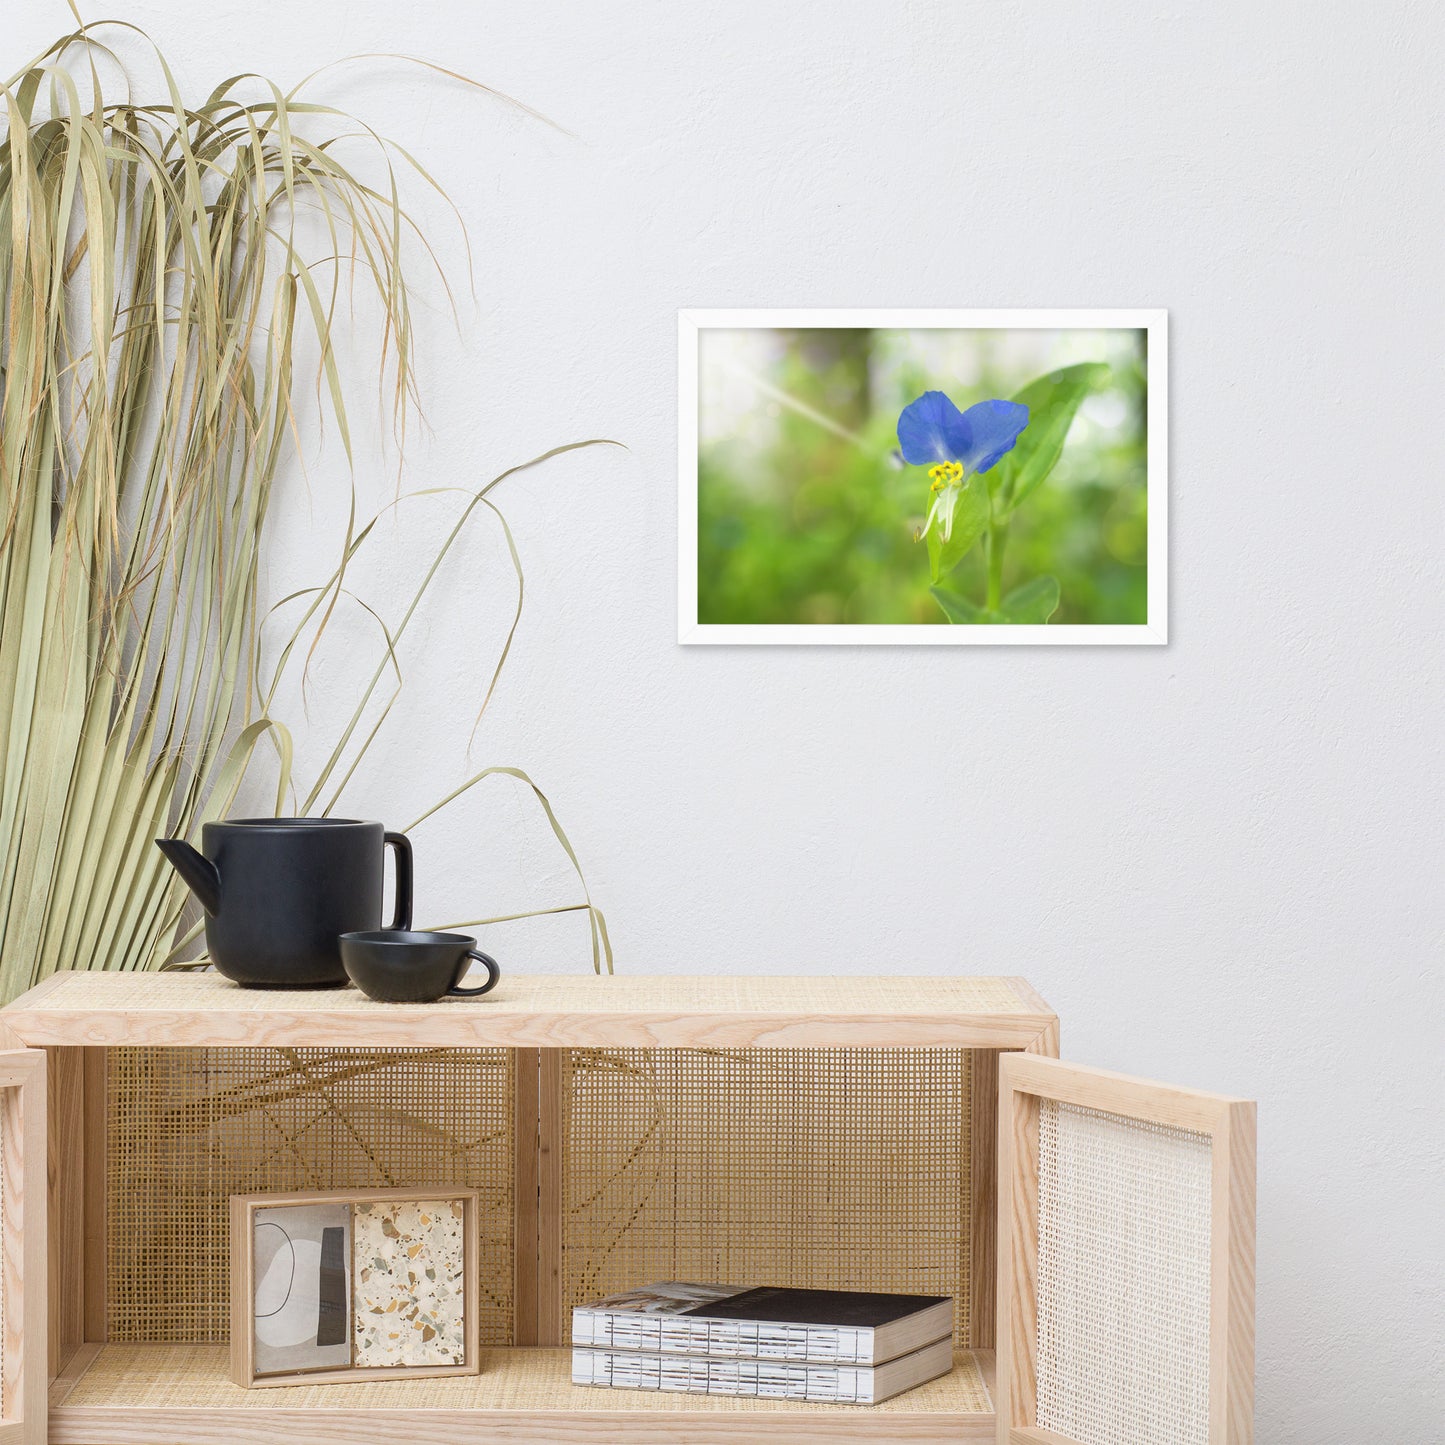 Blue Kitchen Artwork: Asiatic Dayflower - Floral / Botanical / Nature Photo Framed Wall Art Print - Artwork - Modern Wall Decor